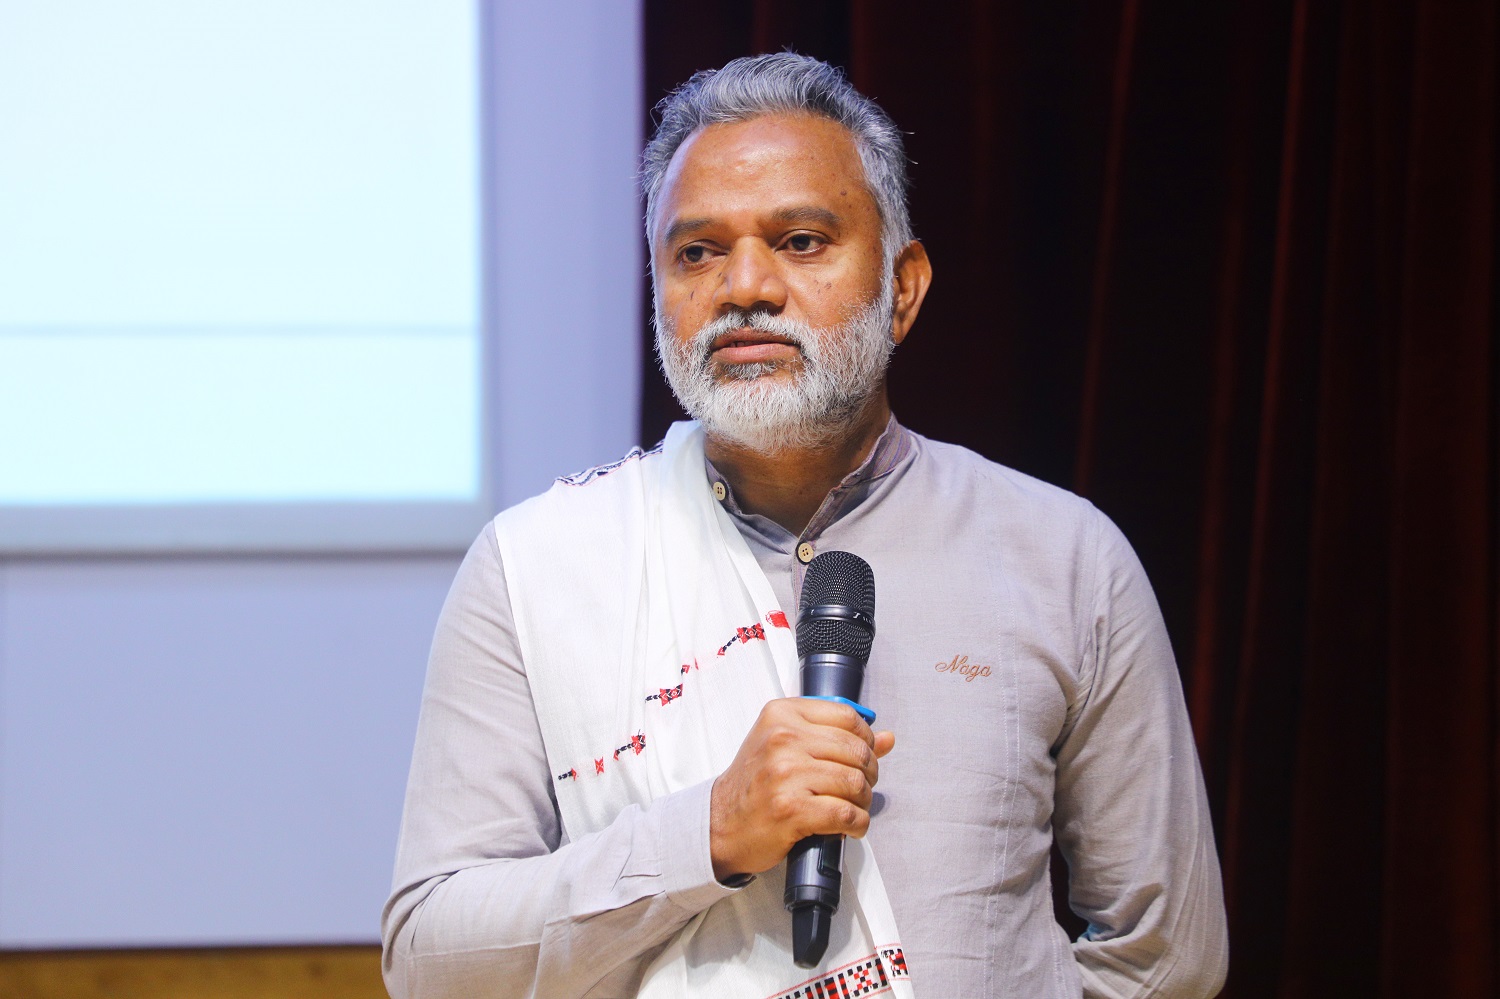 Nagaraja Prakasam, Mentor & Investor, Social Startups, and Advisor and Mentor-in-Residence at NSRCEL, addresses the audience.